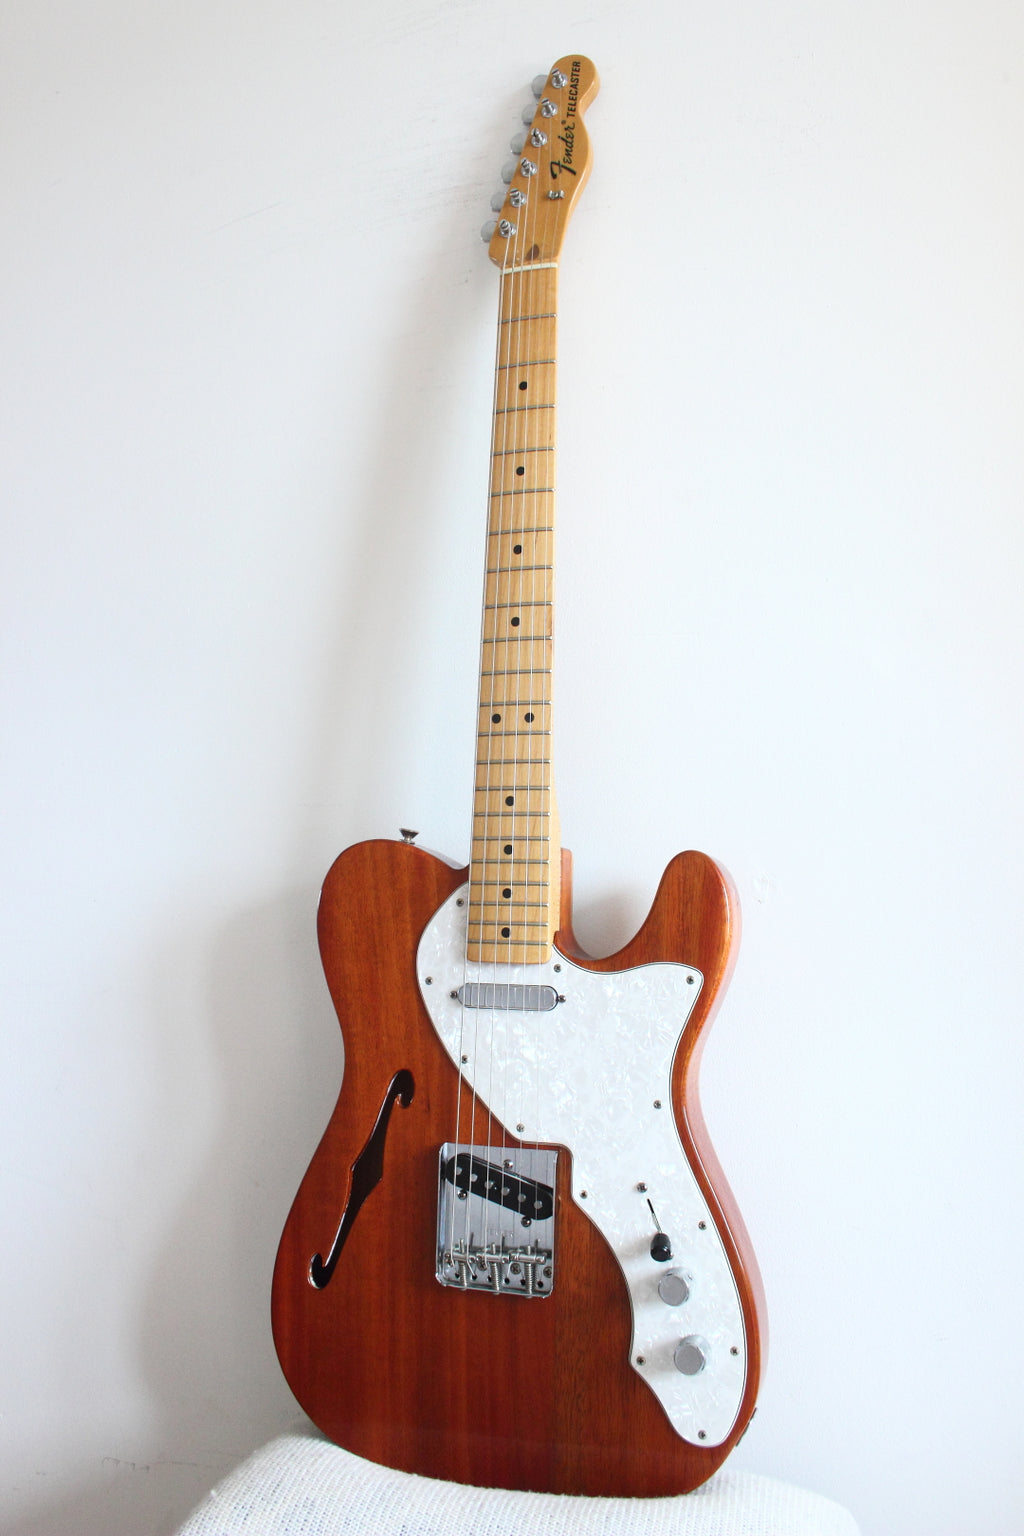 Fender Classic Series '69 Telecaster Thinline Natural Mahogany 2008